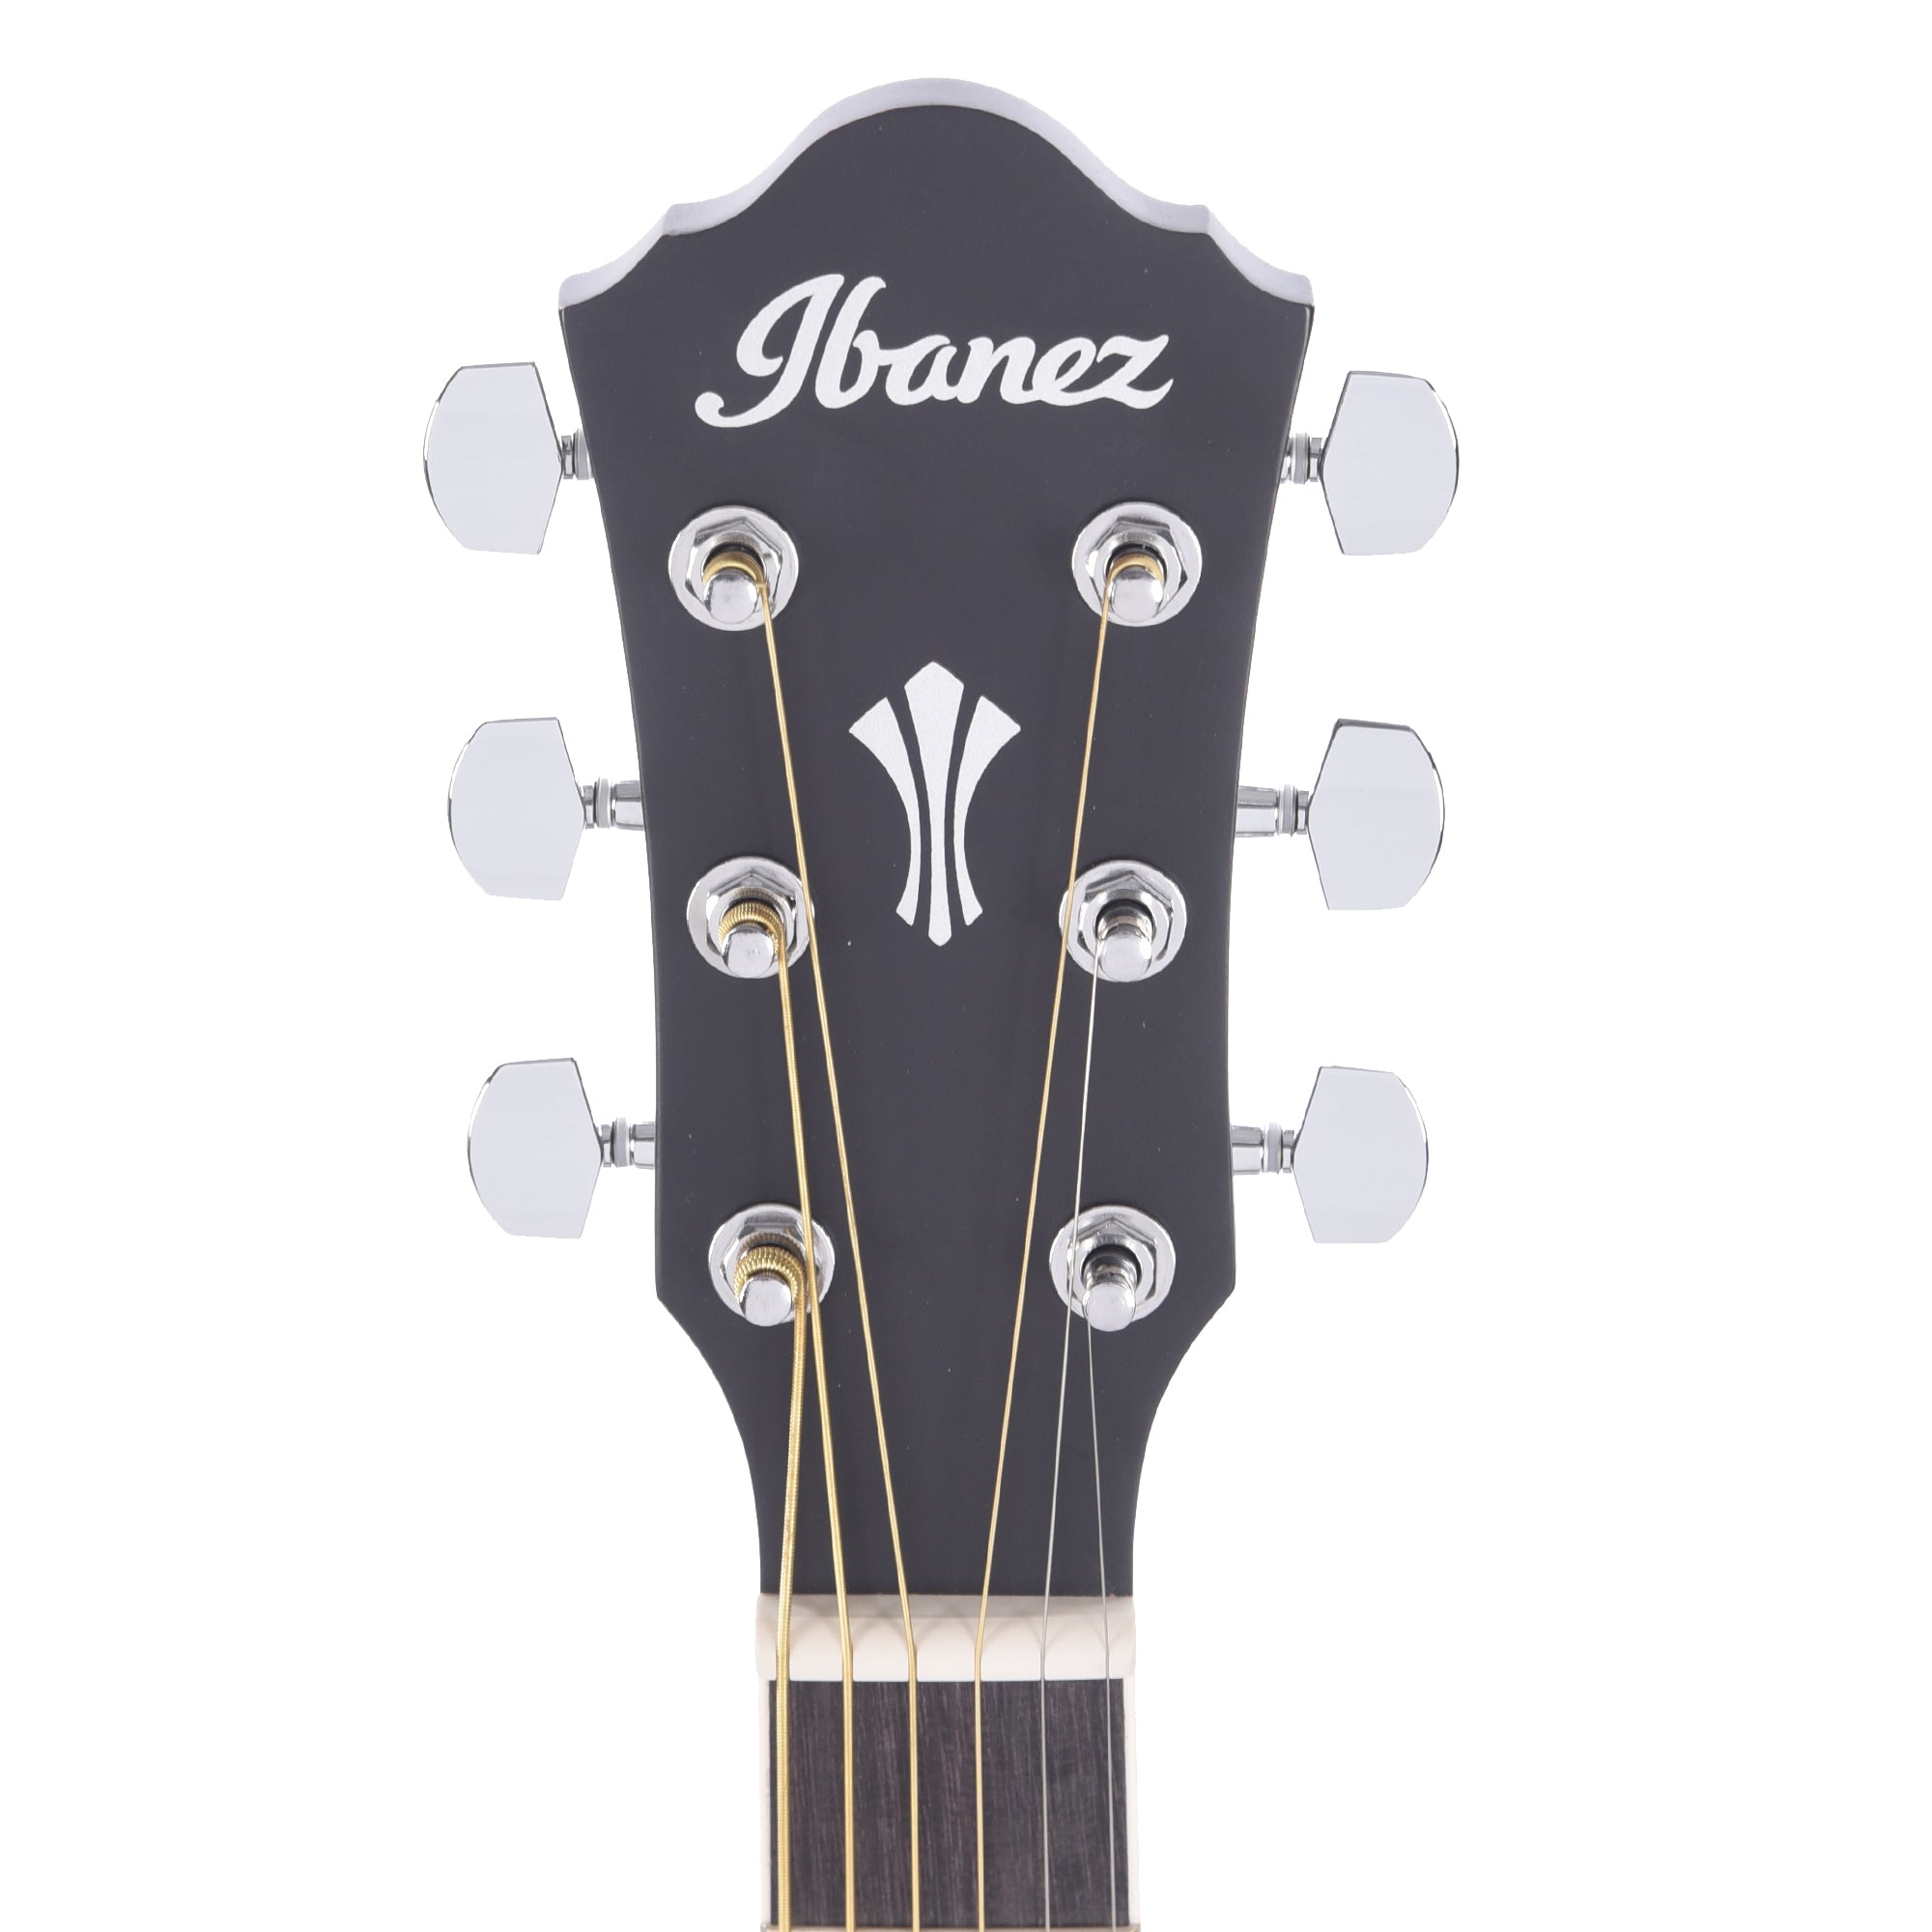 Ibanez AEG7MHWK Acoustic Guitar Weathered Black Open Pore